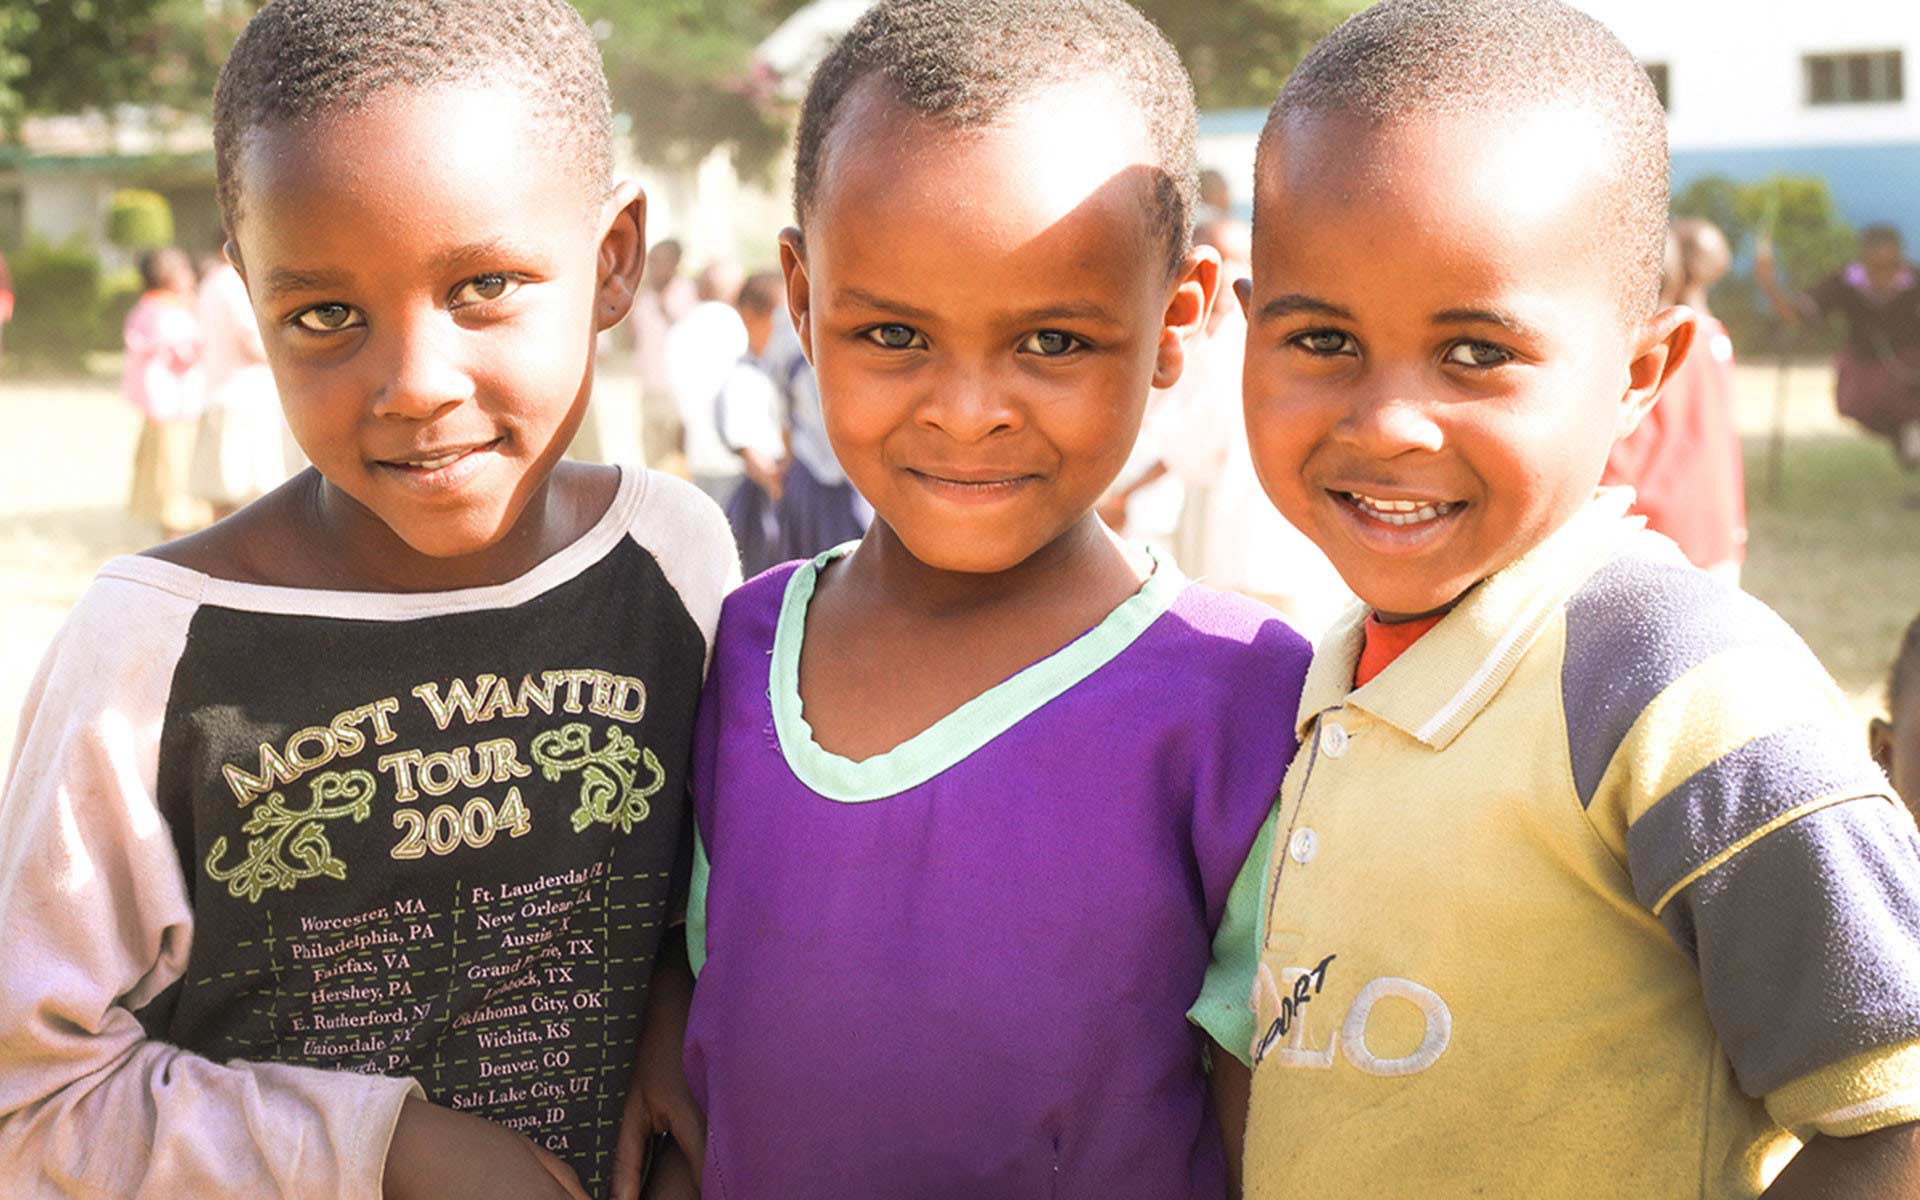 Three boys standing together at their child development center